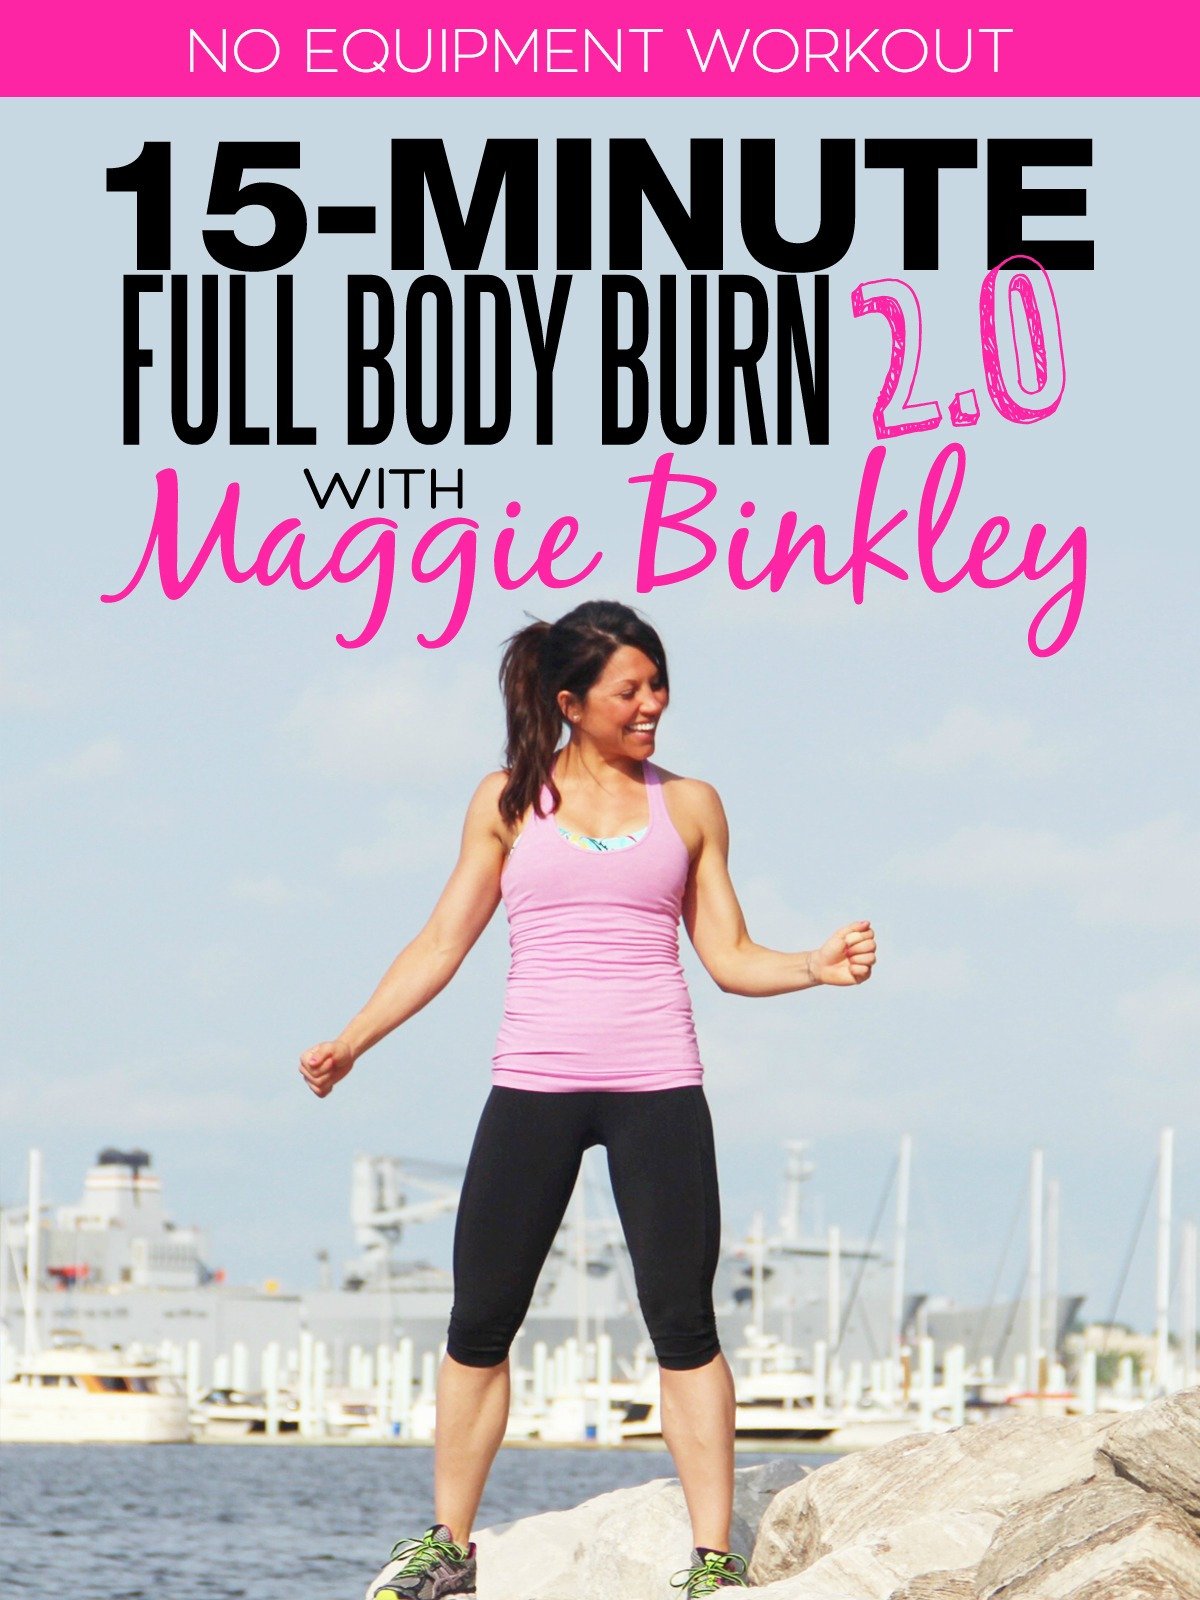 15-Minute Full Body Burn 2.0 Workout